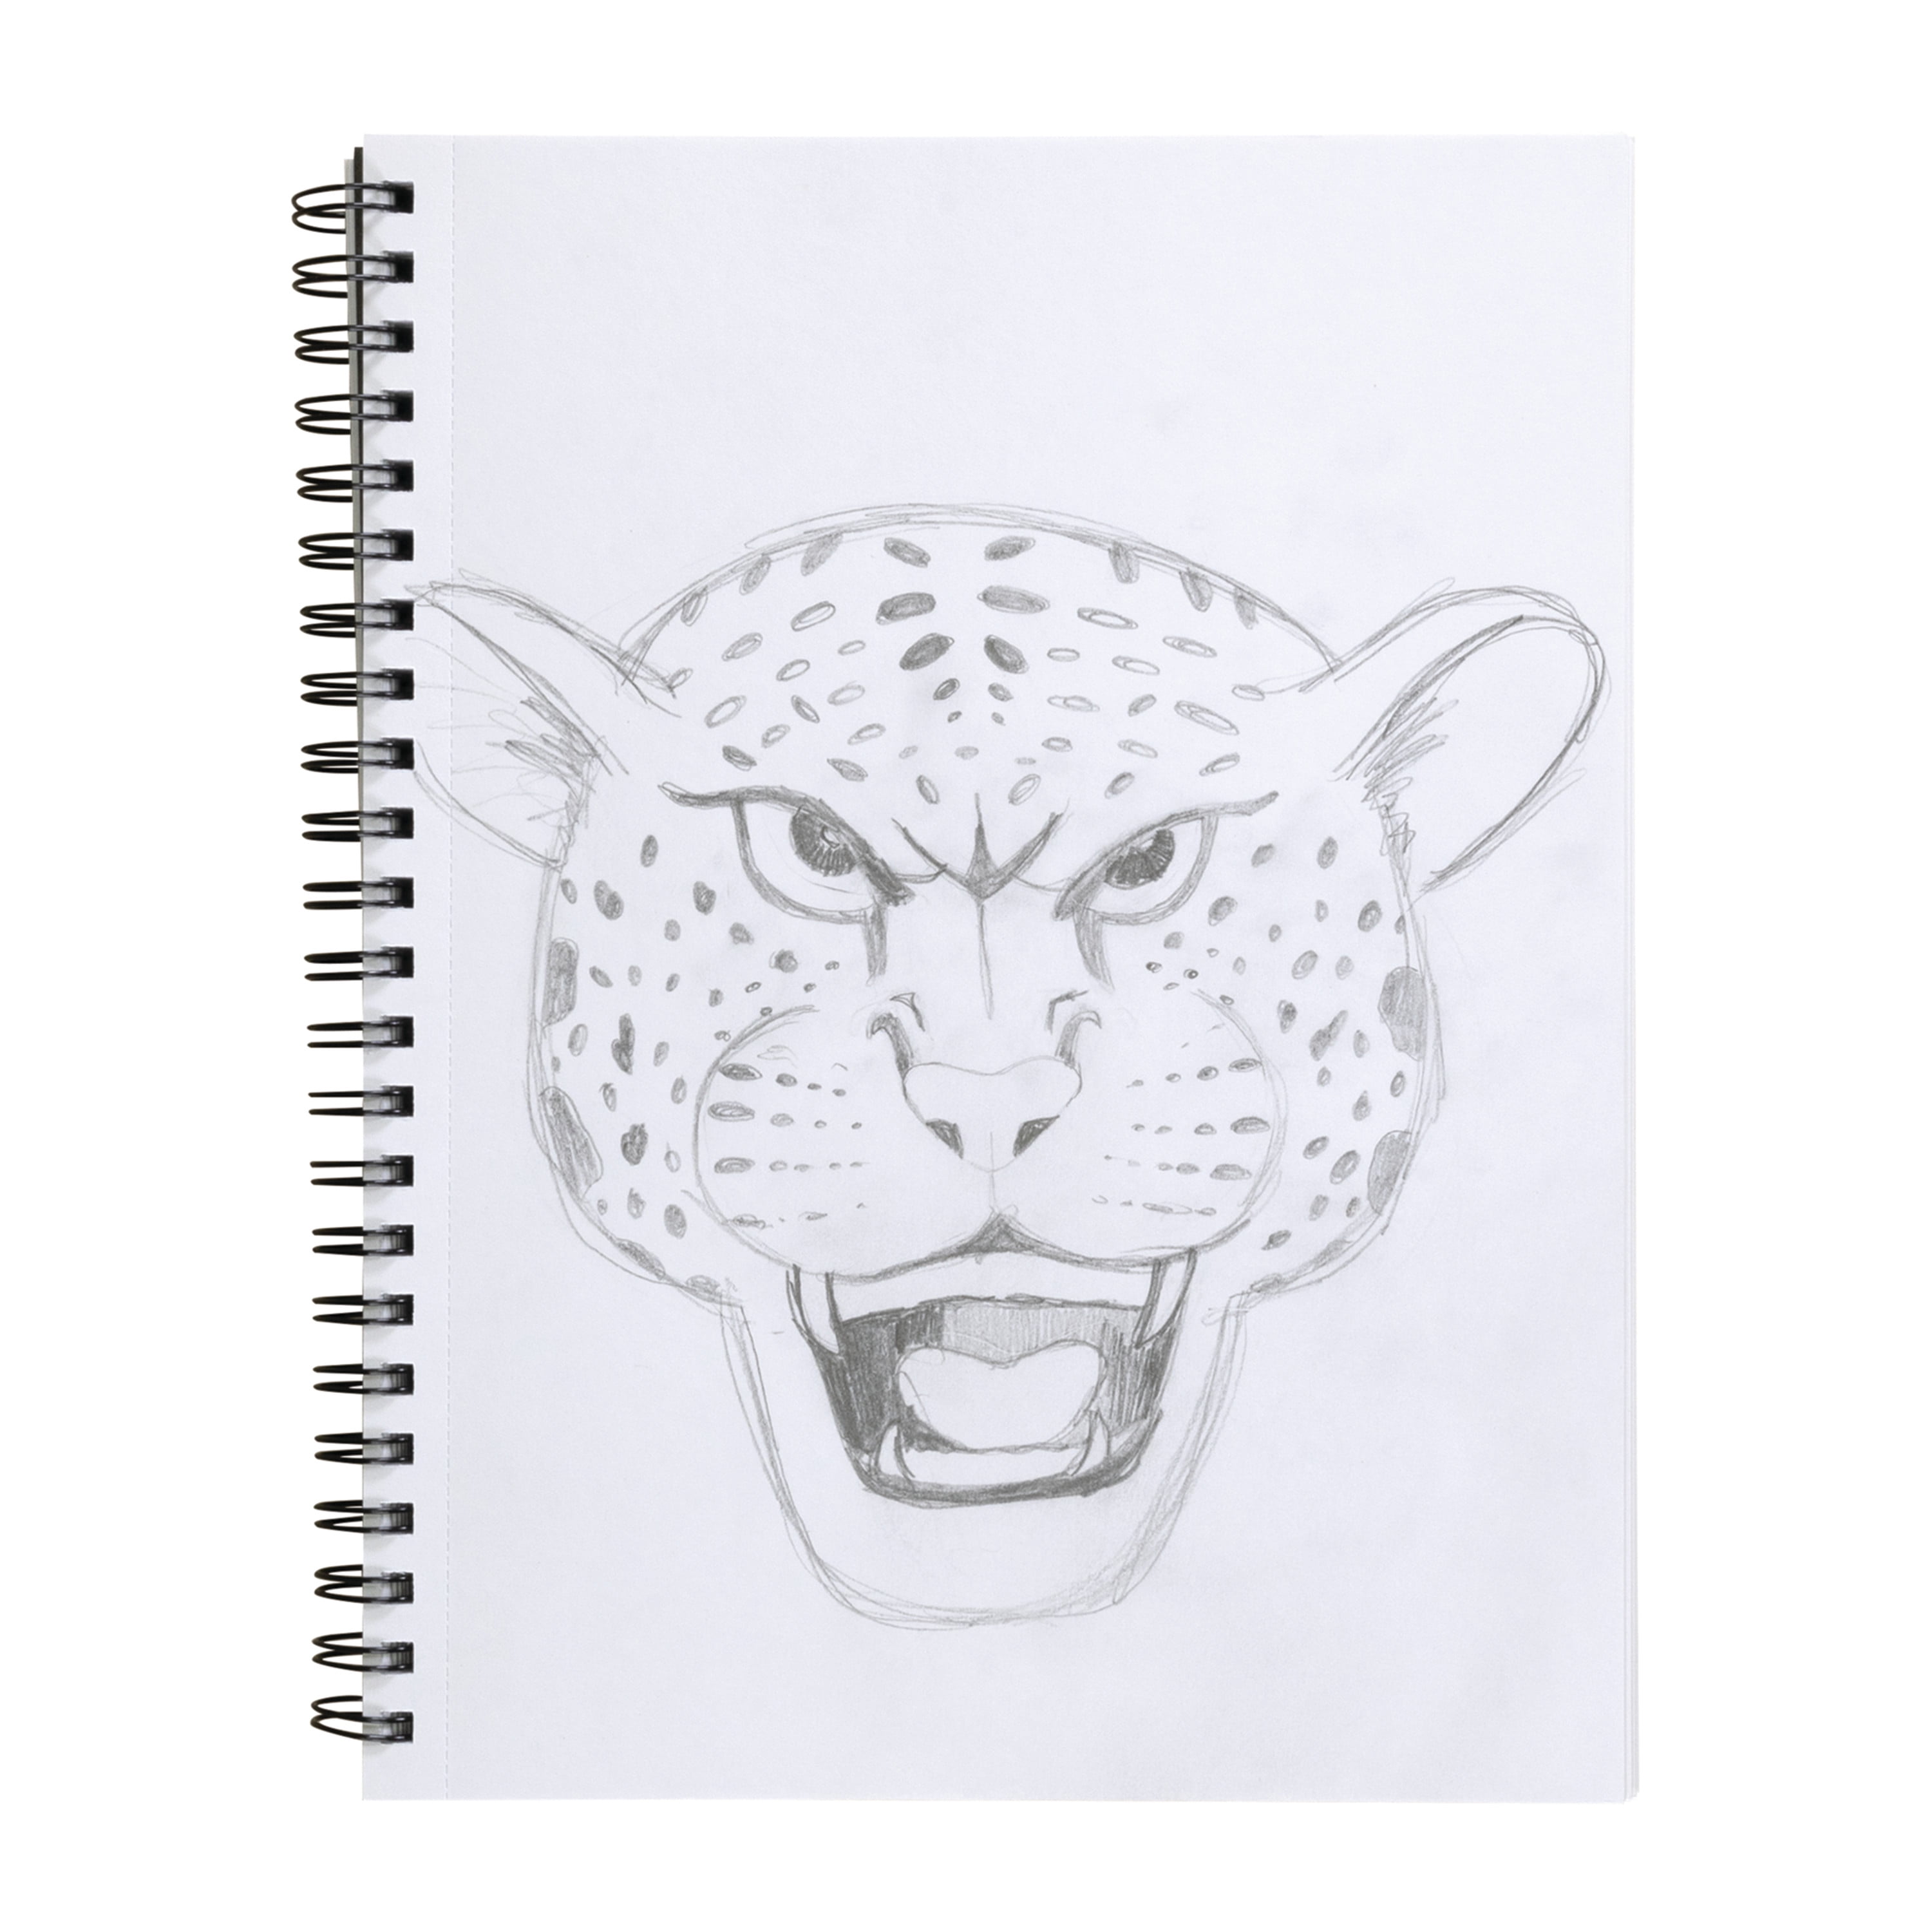 Sketch Pad for Boys-Artist Pad Paper-щ-Drawing Pad Boys- Sketch Book 8x5-  Sketch Book